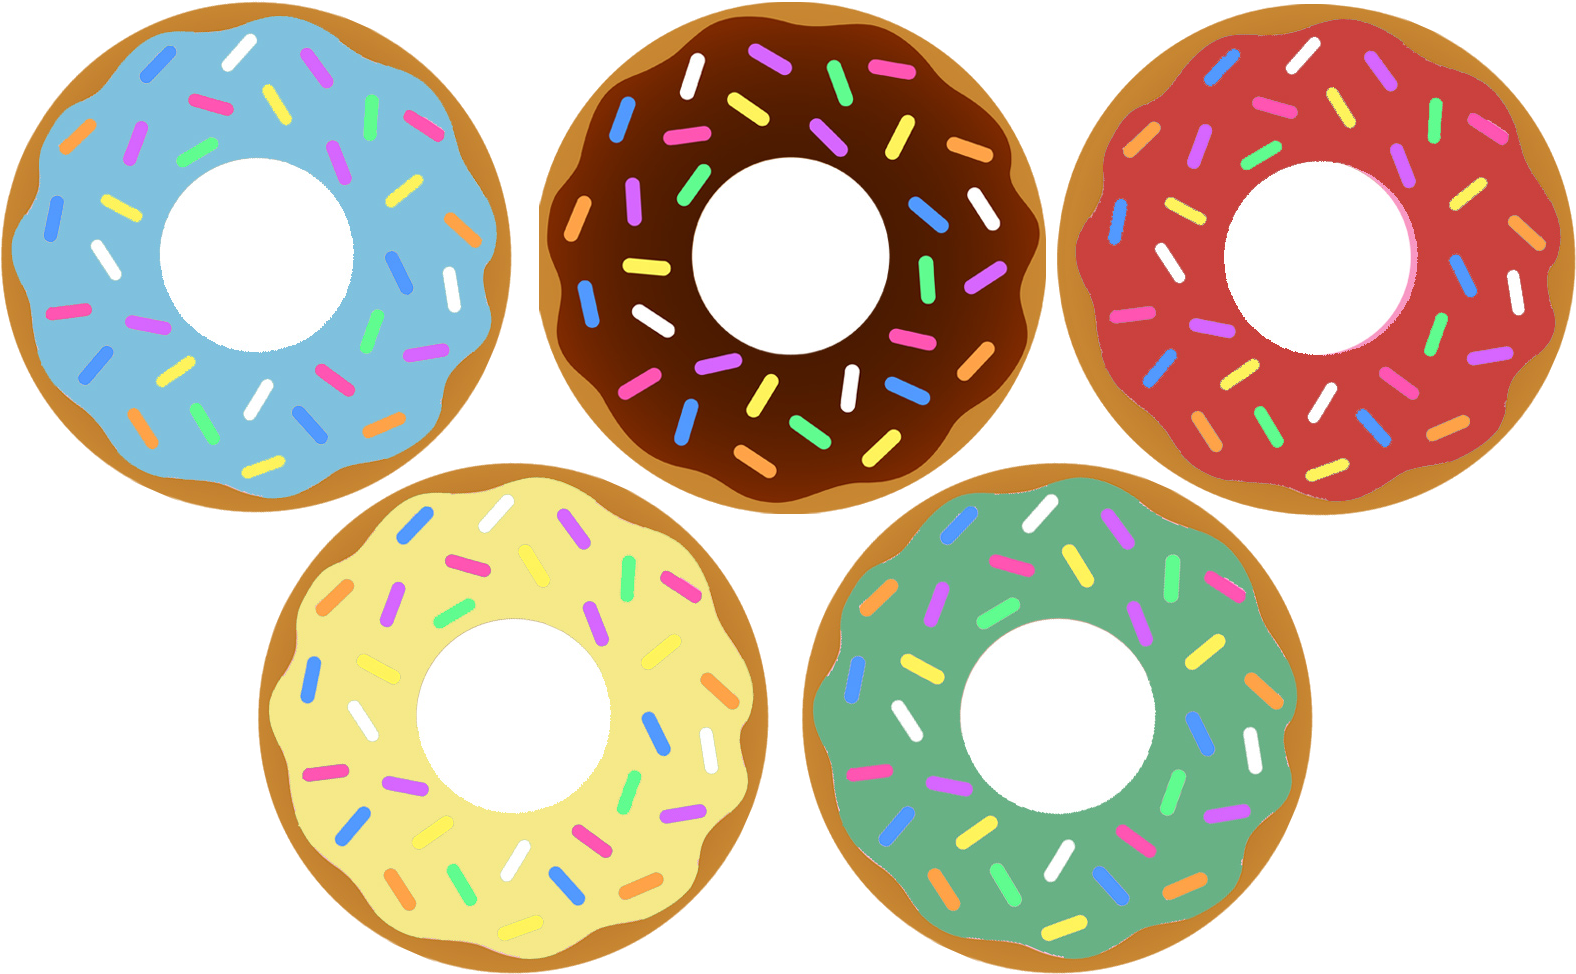 Assorted Sprinkled Doughnuts Illustration